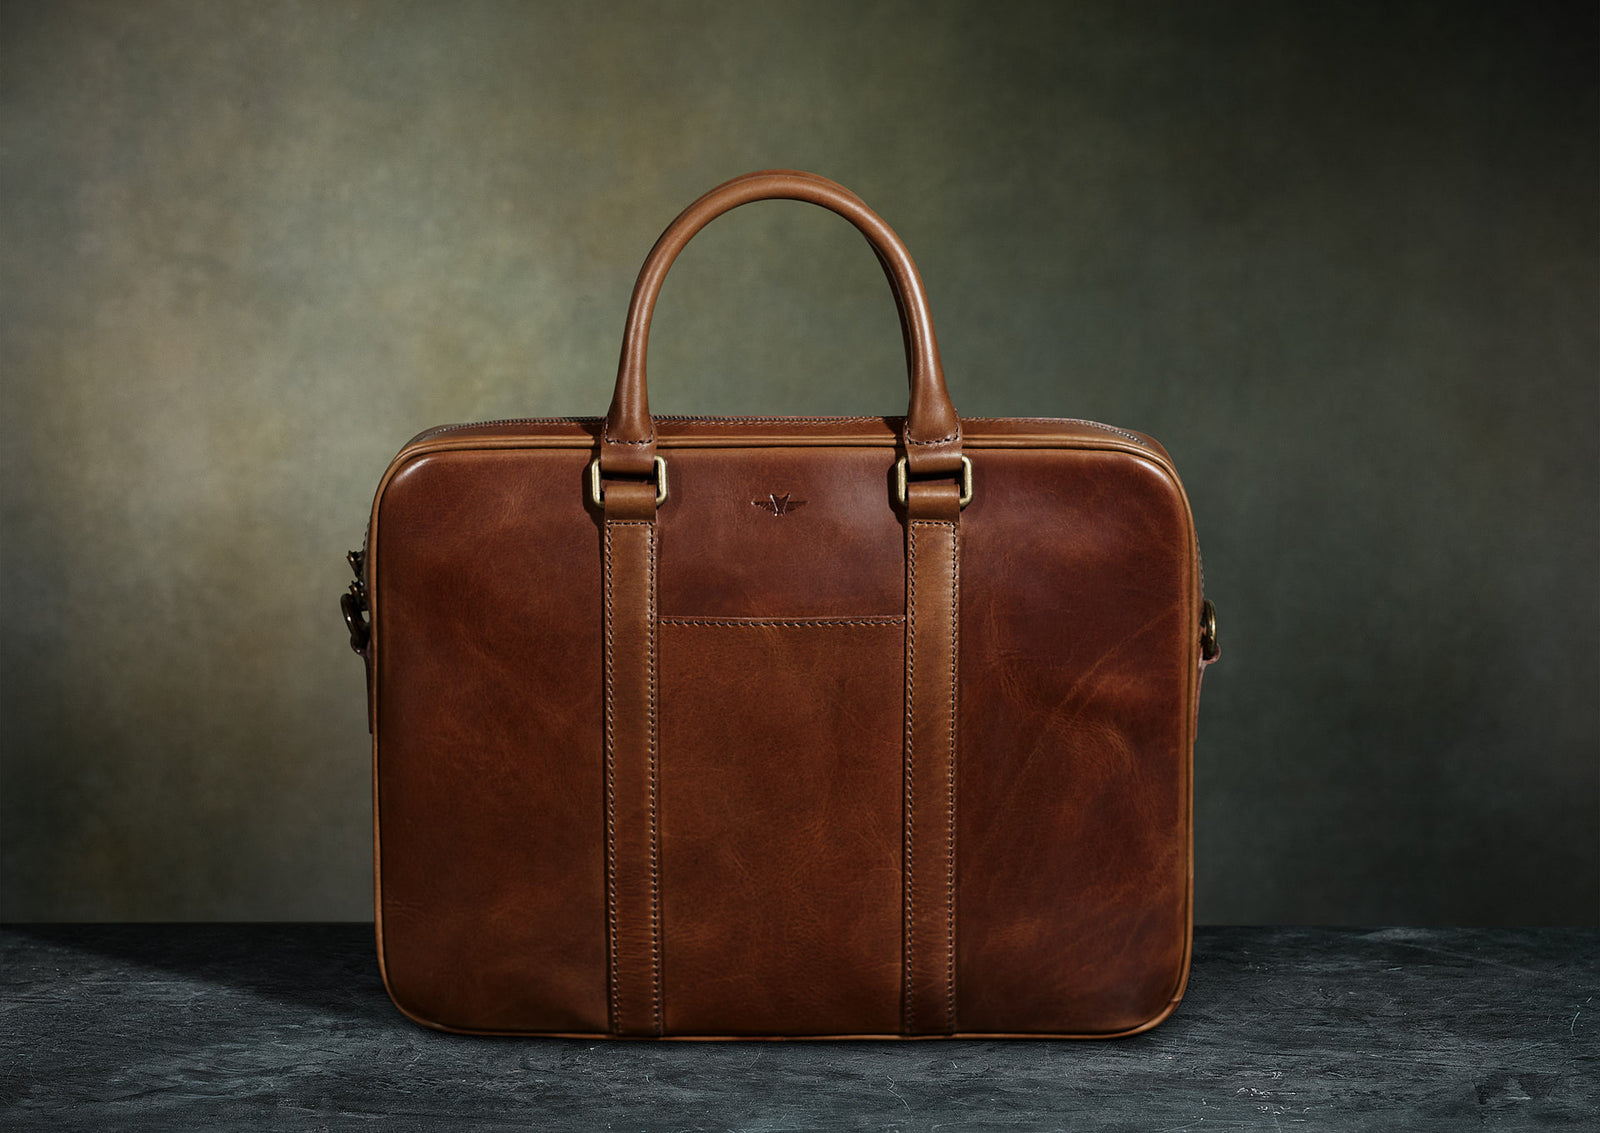 John & Paul Slim Cognac Leather Briefcase 2.0 - John & Paul